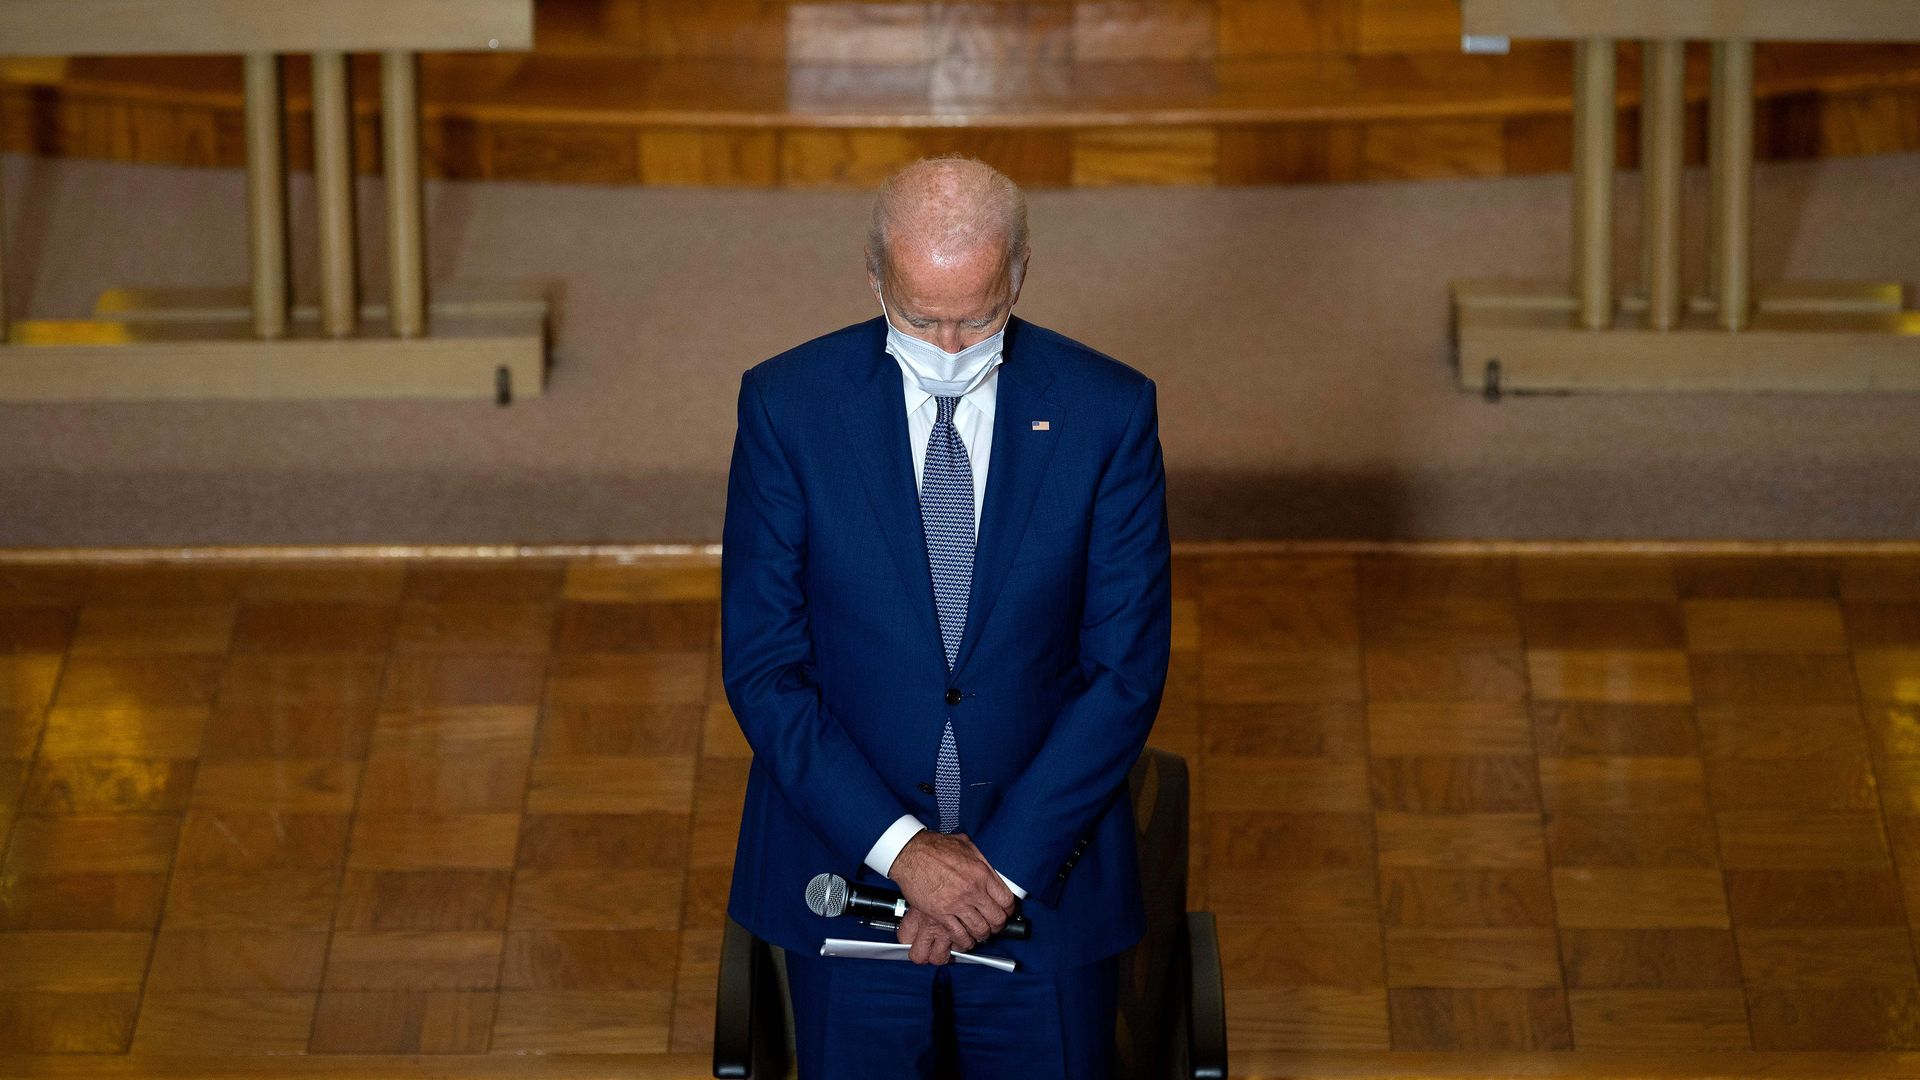 Joe Biden prays at Grace Lutheran Church in Kenosha, Wisconsin, on September 3, 2020, in the aftermath of the police shooting of Jacob Blake.